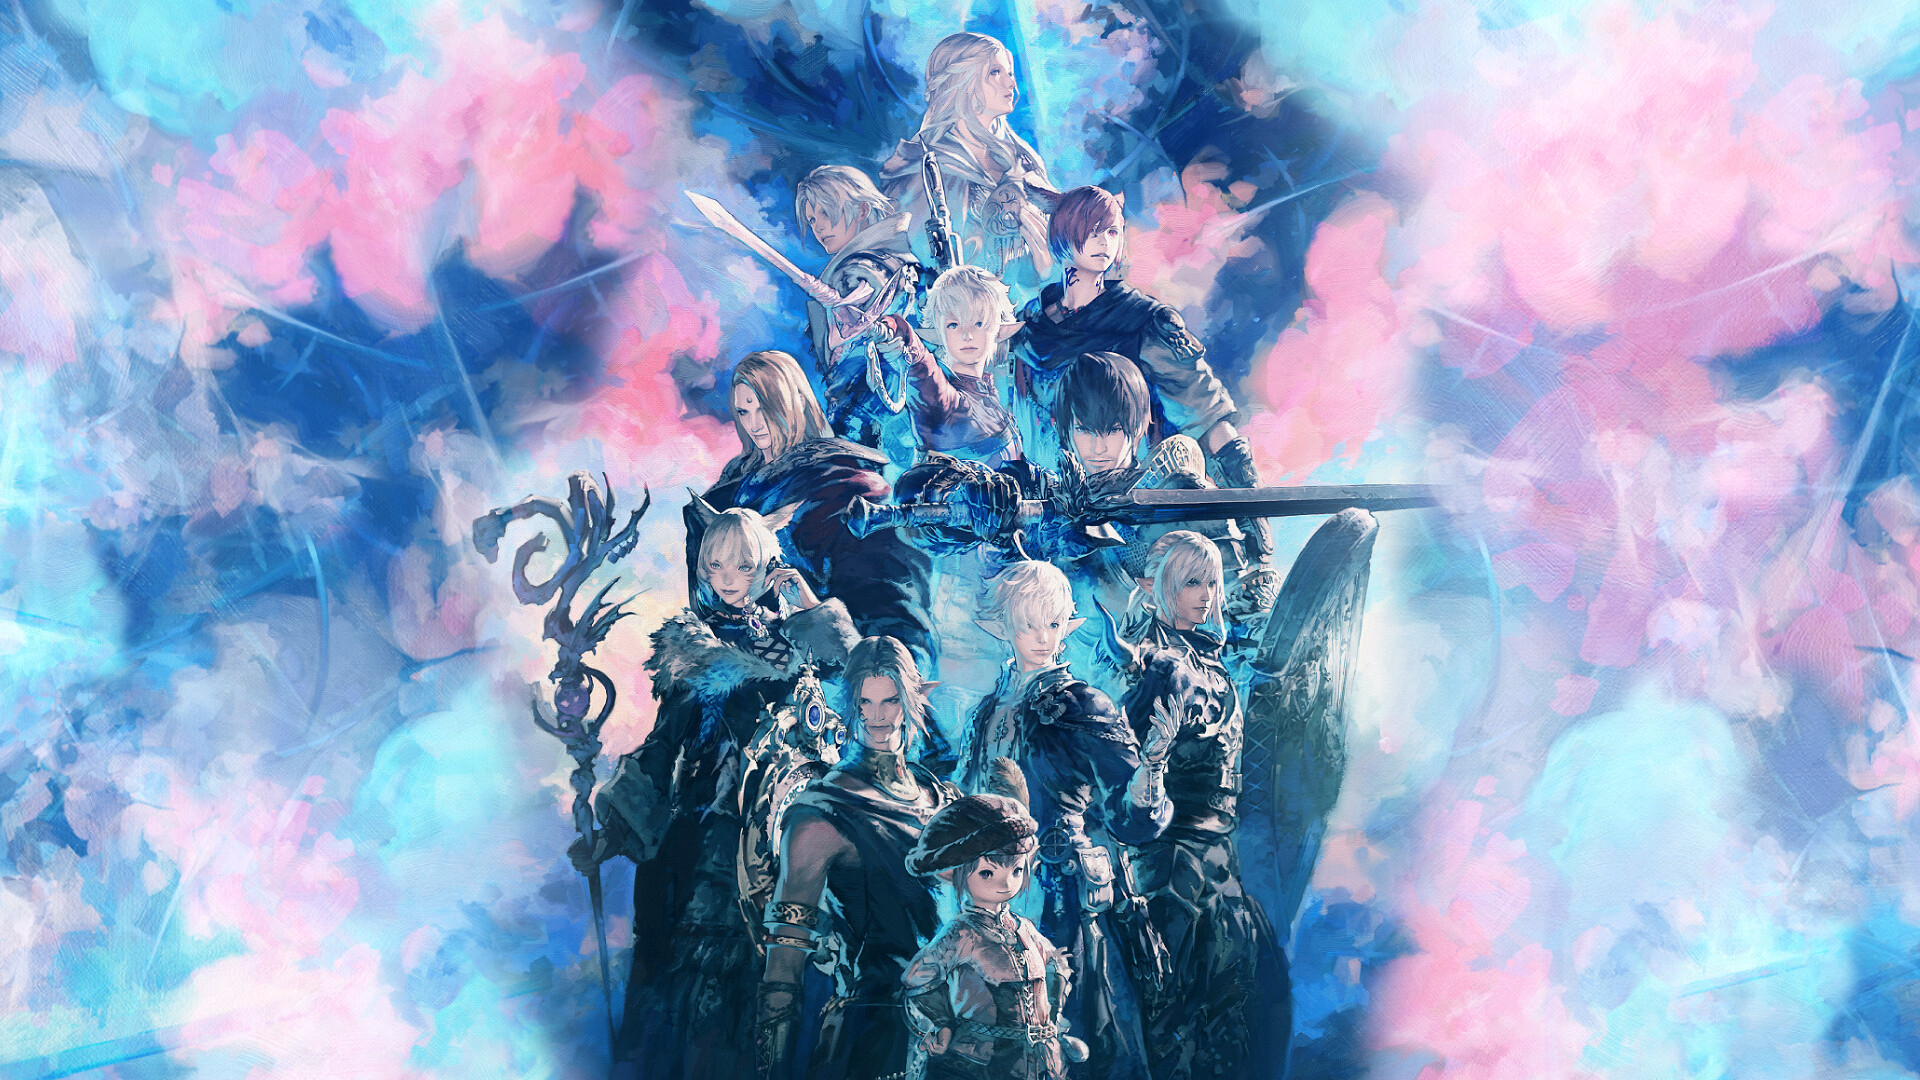 Final Fantasy XIV: Endwalker, Released on December 7, 2021, two years after Shadowbringers. 1920x1080 Full HD Wallpaper.